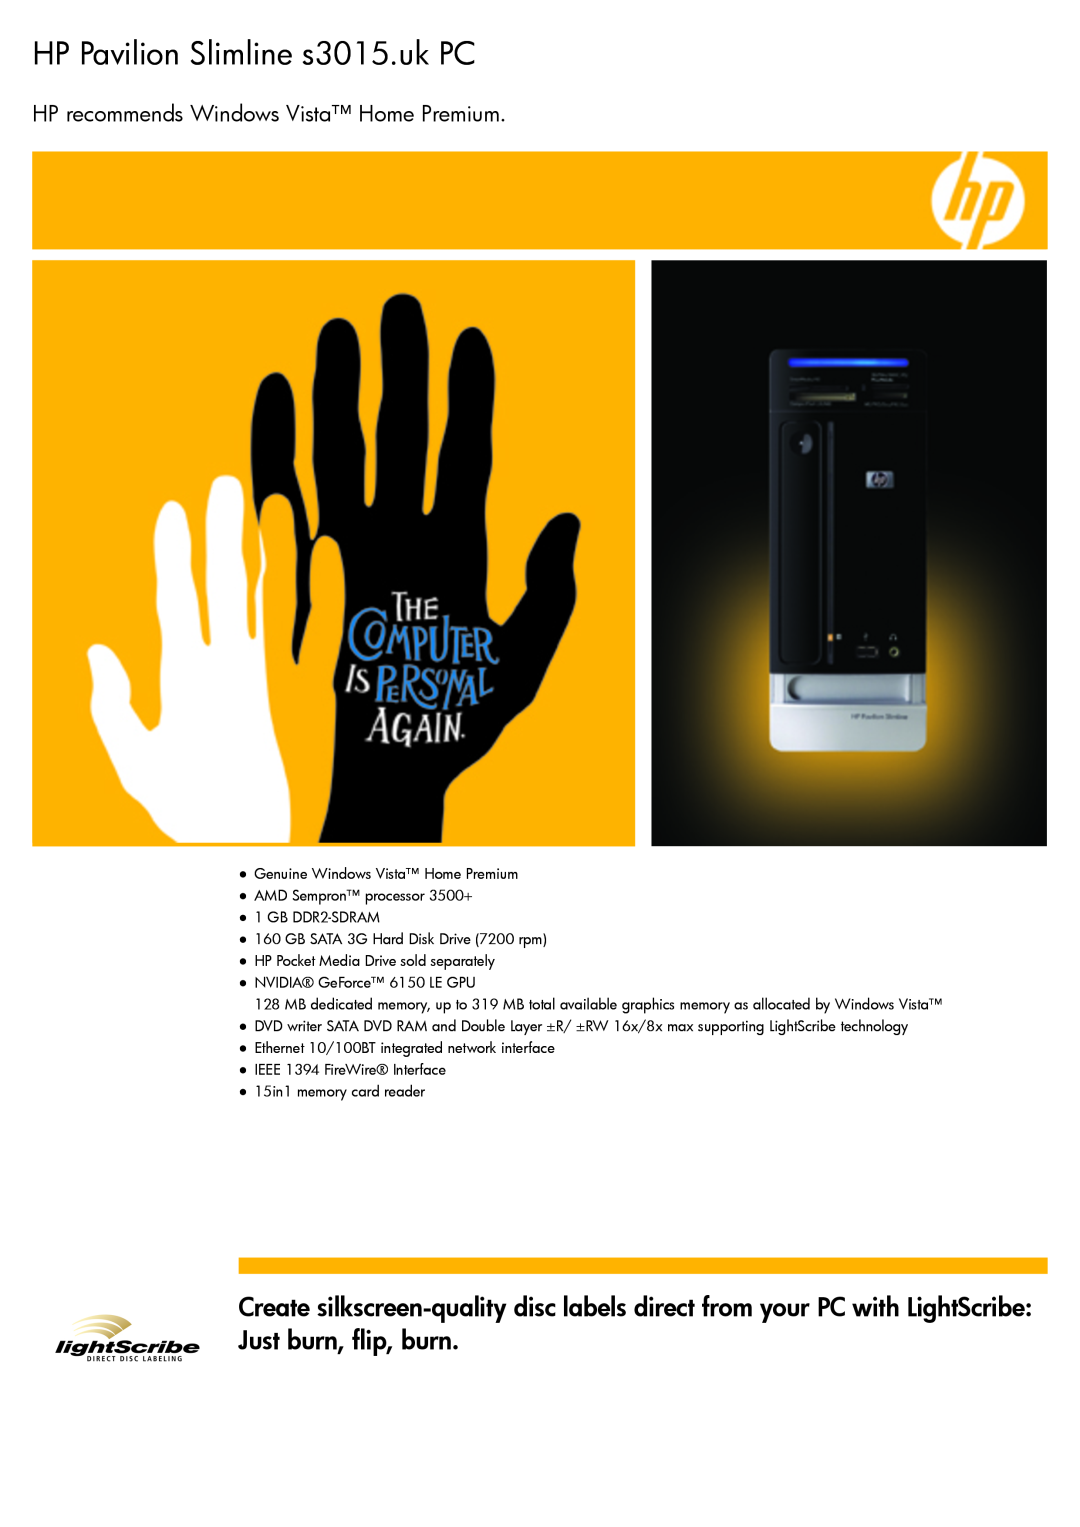 BT manual HP Pavilion Slimline s3015.uk PC, HP recommends Windows Vista Home Premium 